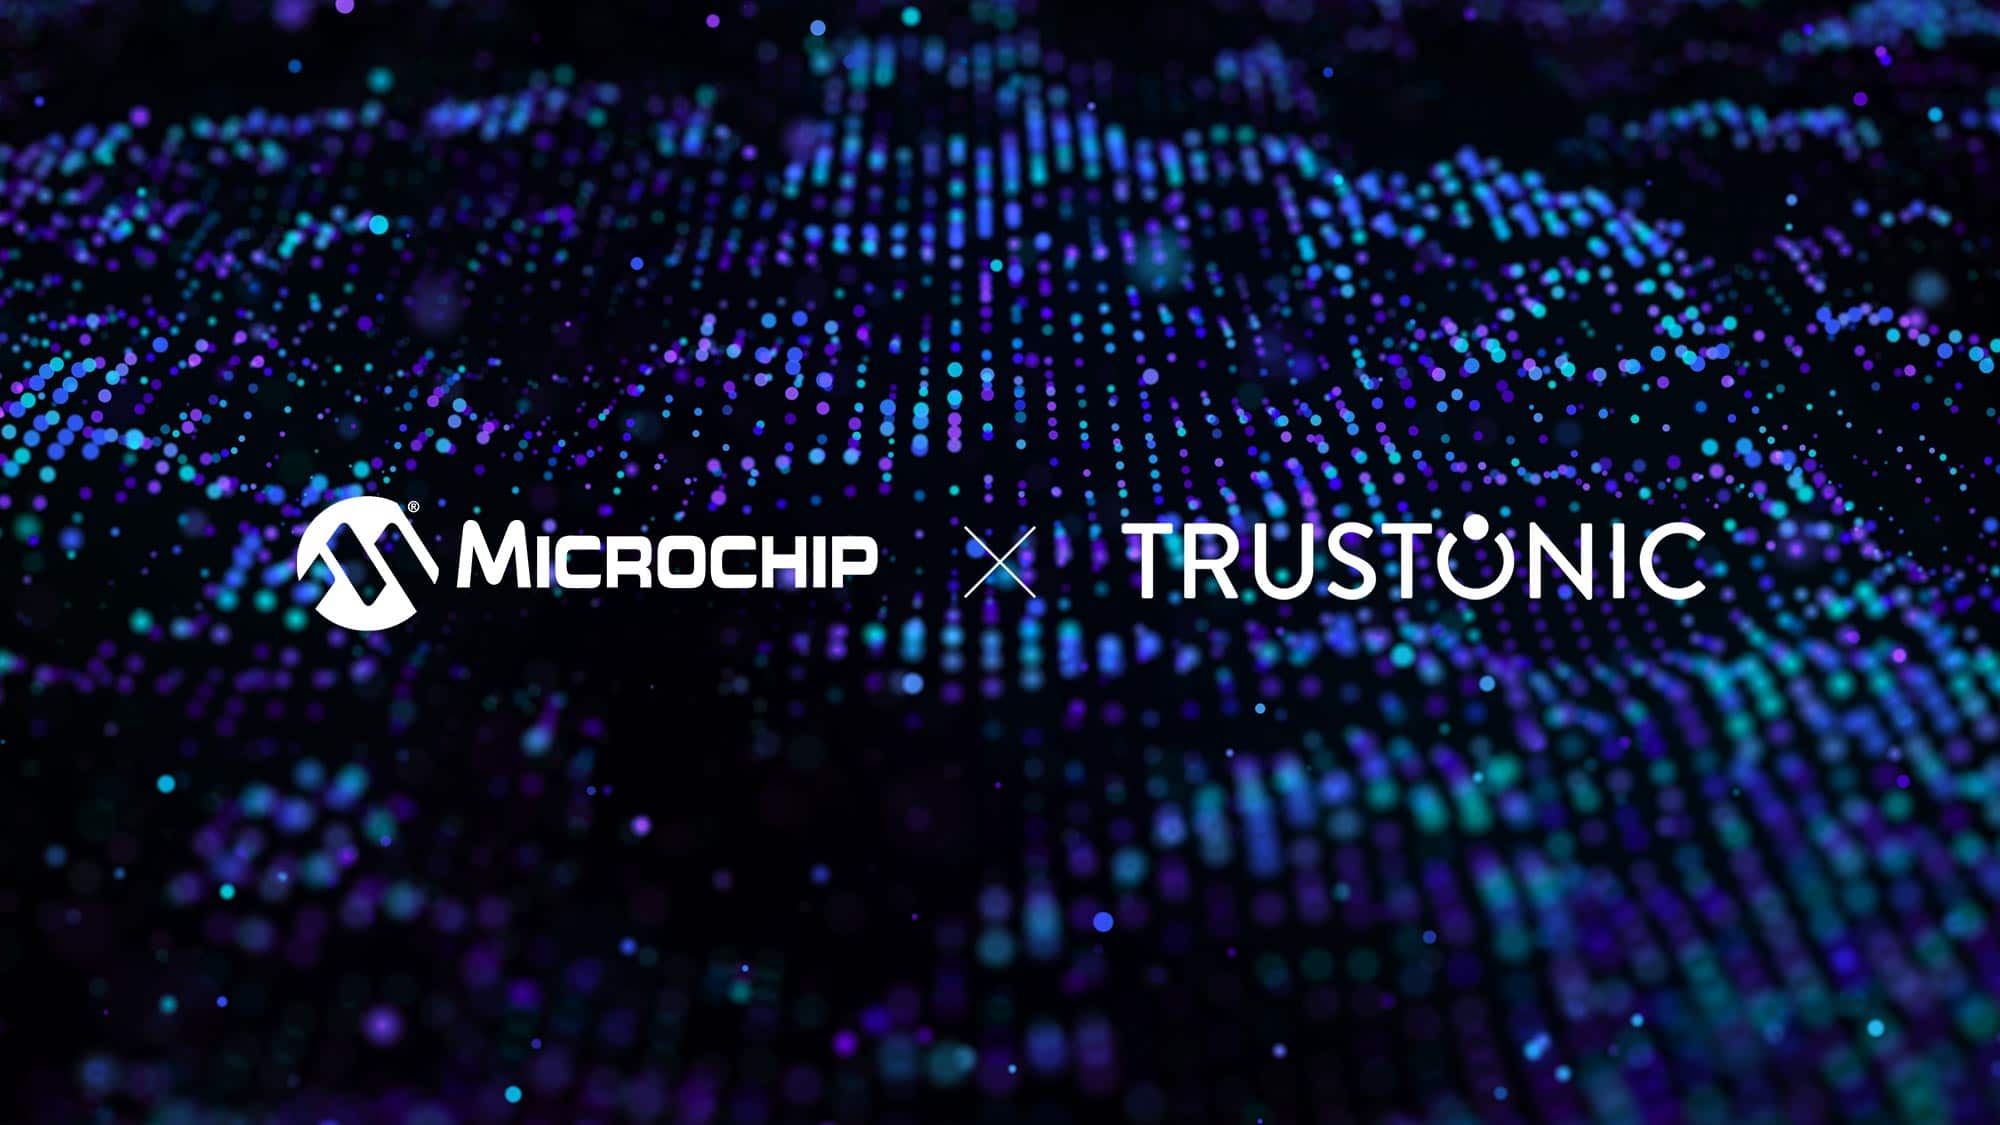 Microchip and Trustonic